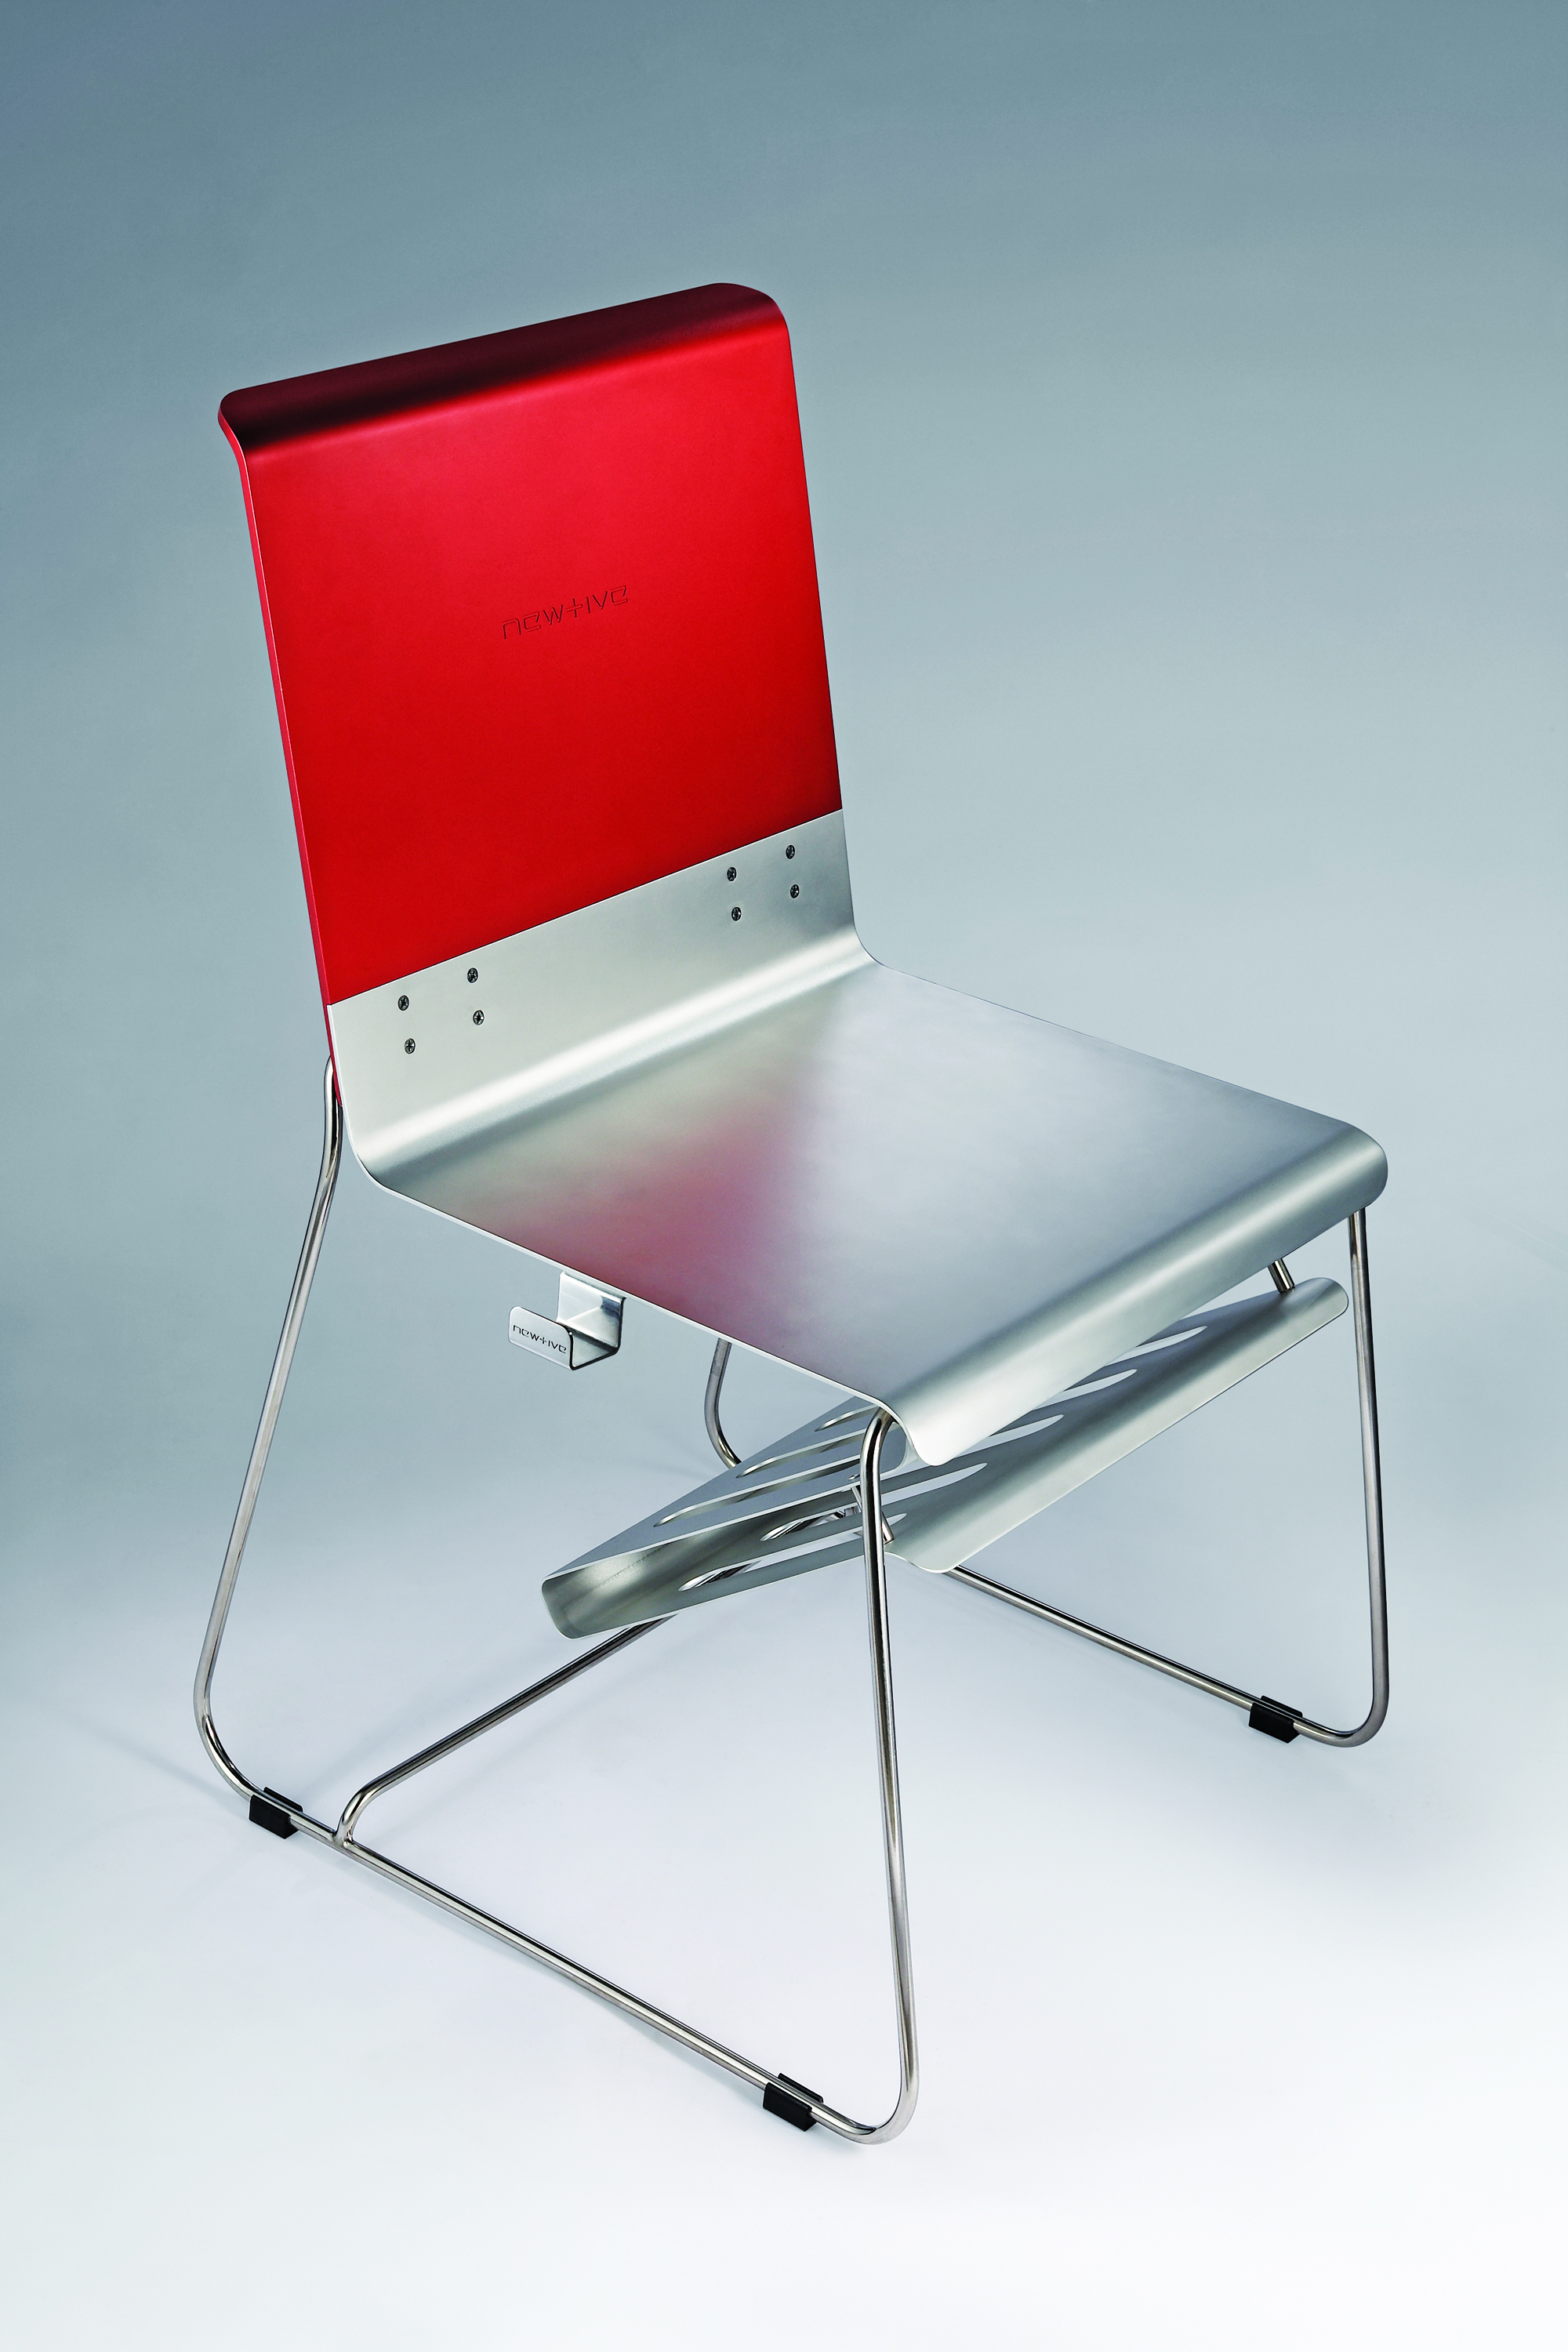 pocket chair — carl liu